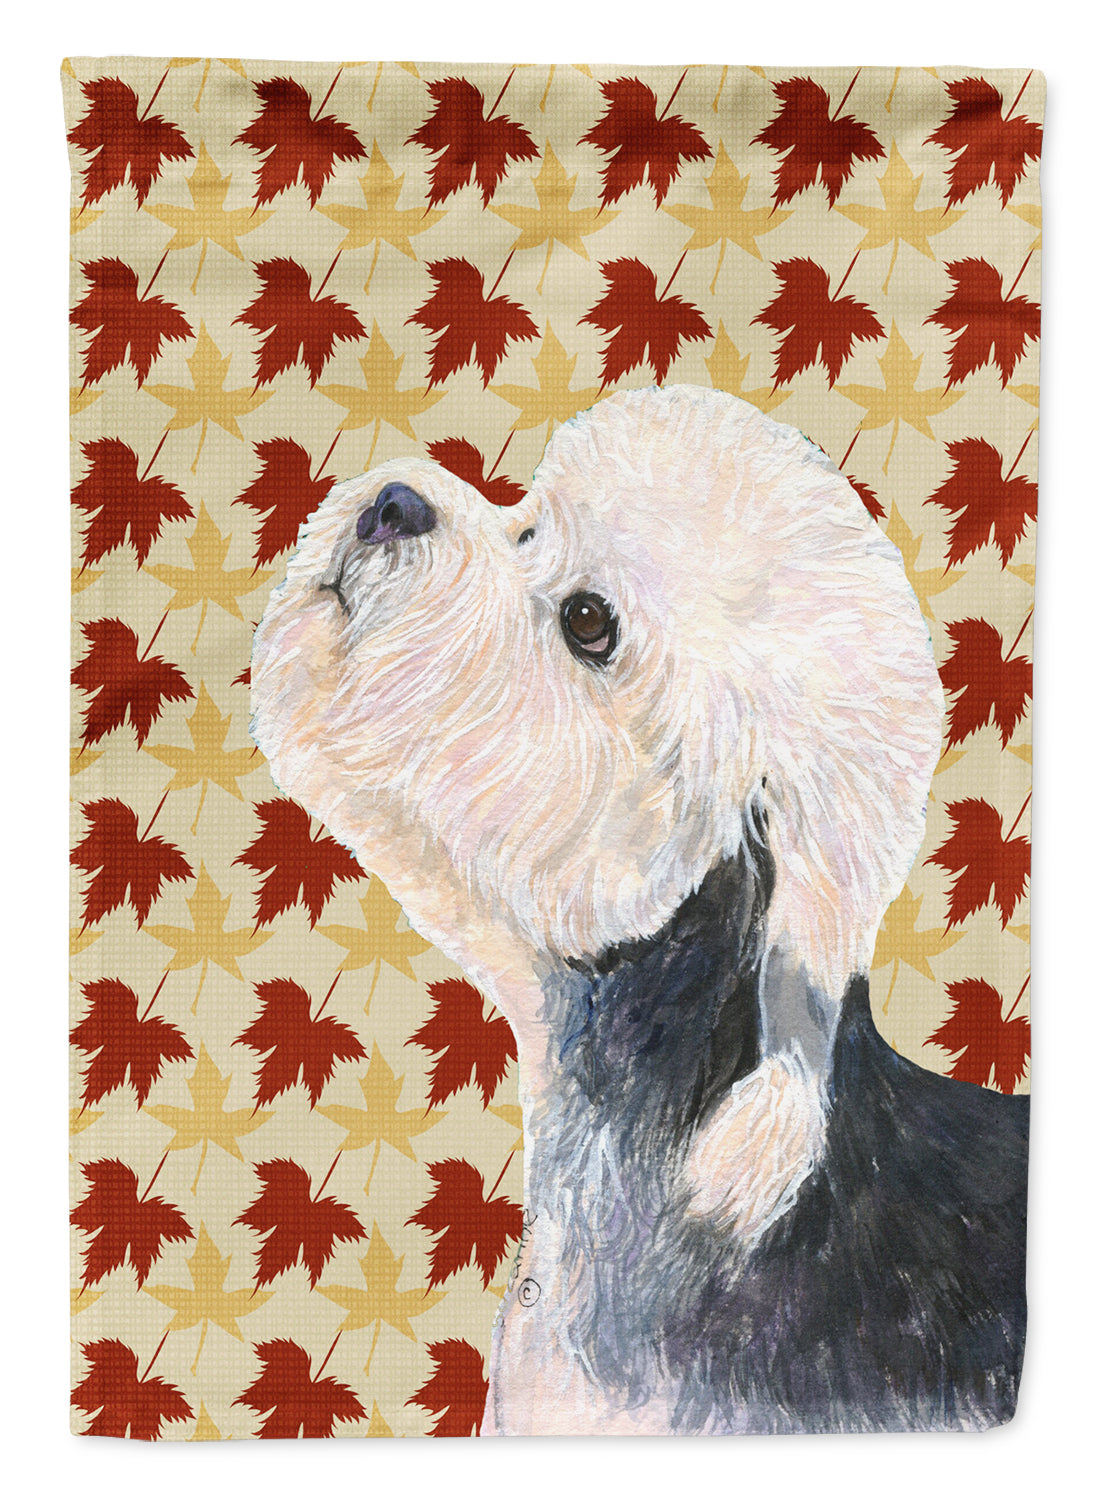 Dandie Dinmont Terrier Fall Leaves Portrait Flag Garden Size.